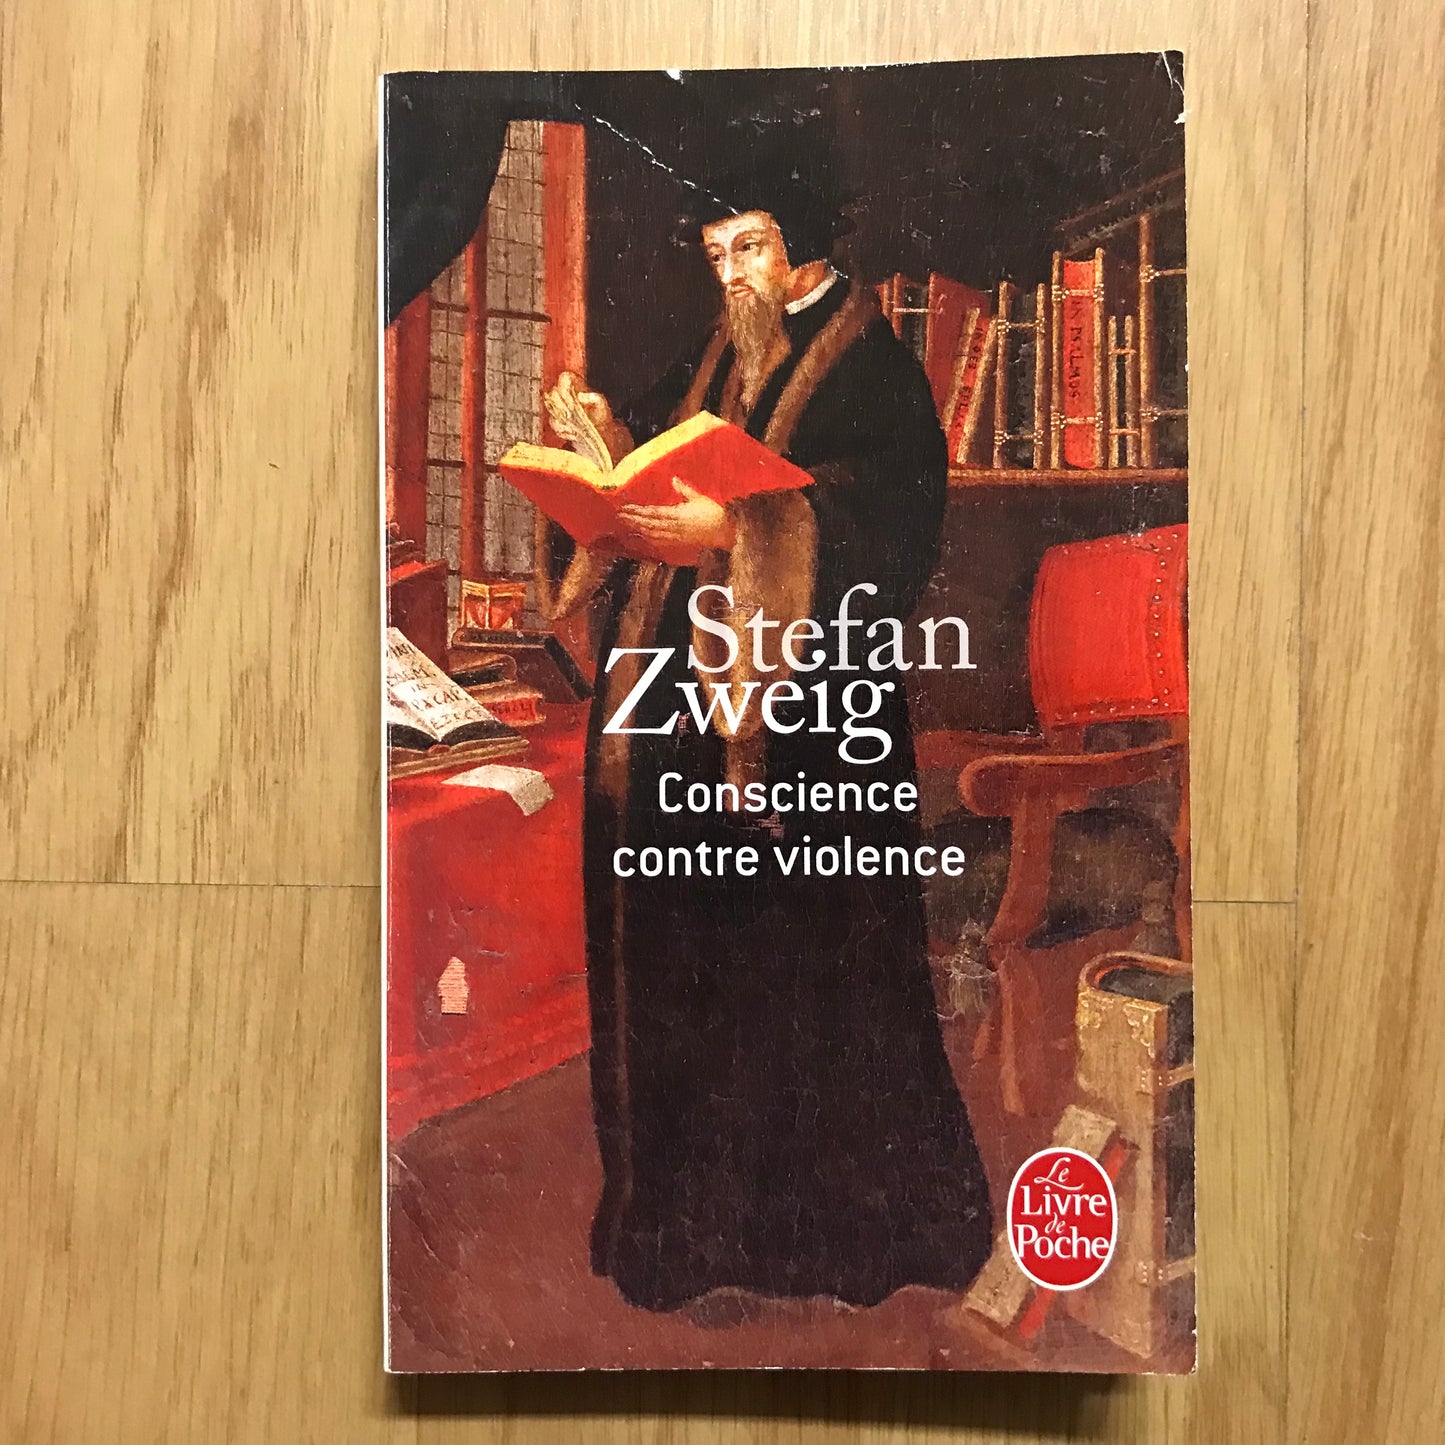 Zweig, Stefan - Conscience contre violence